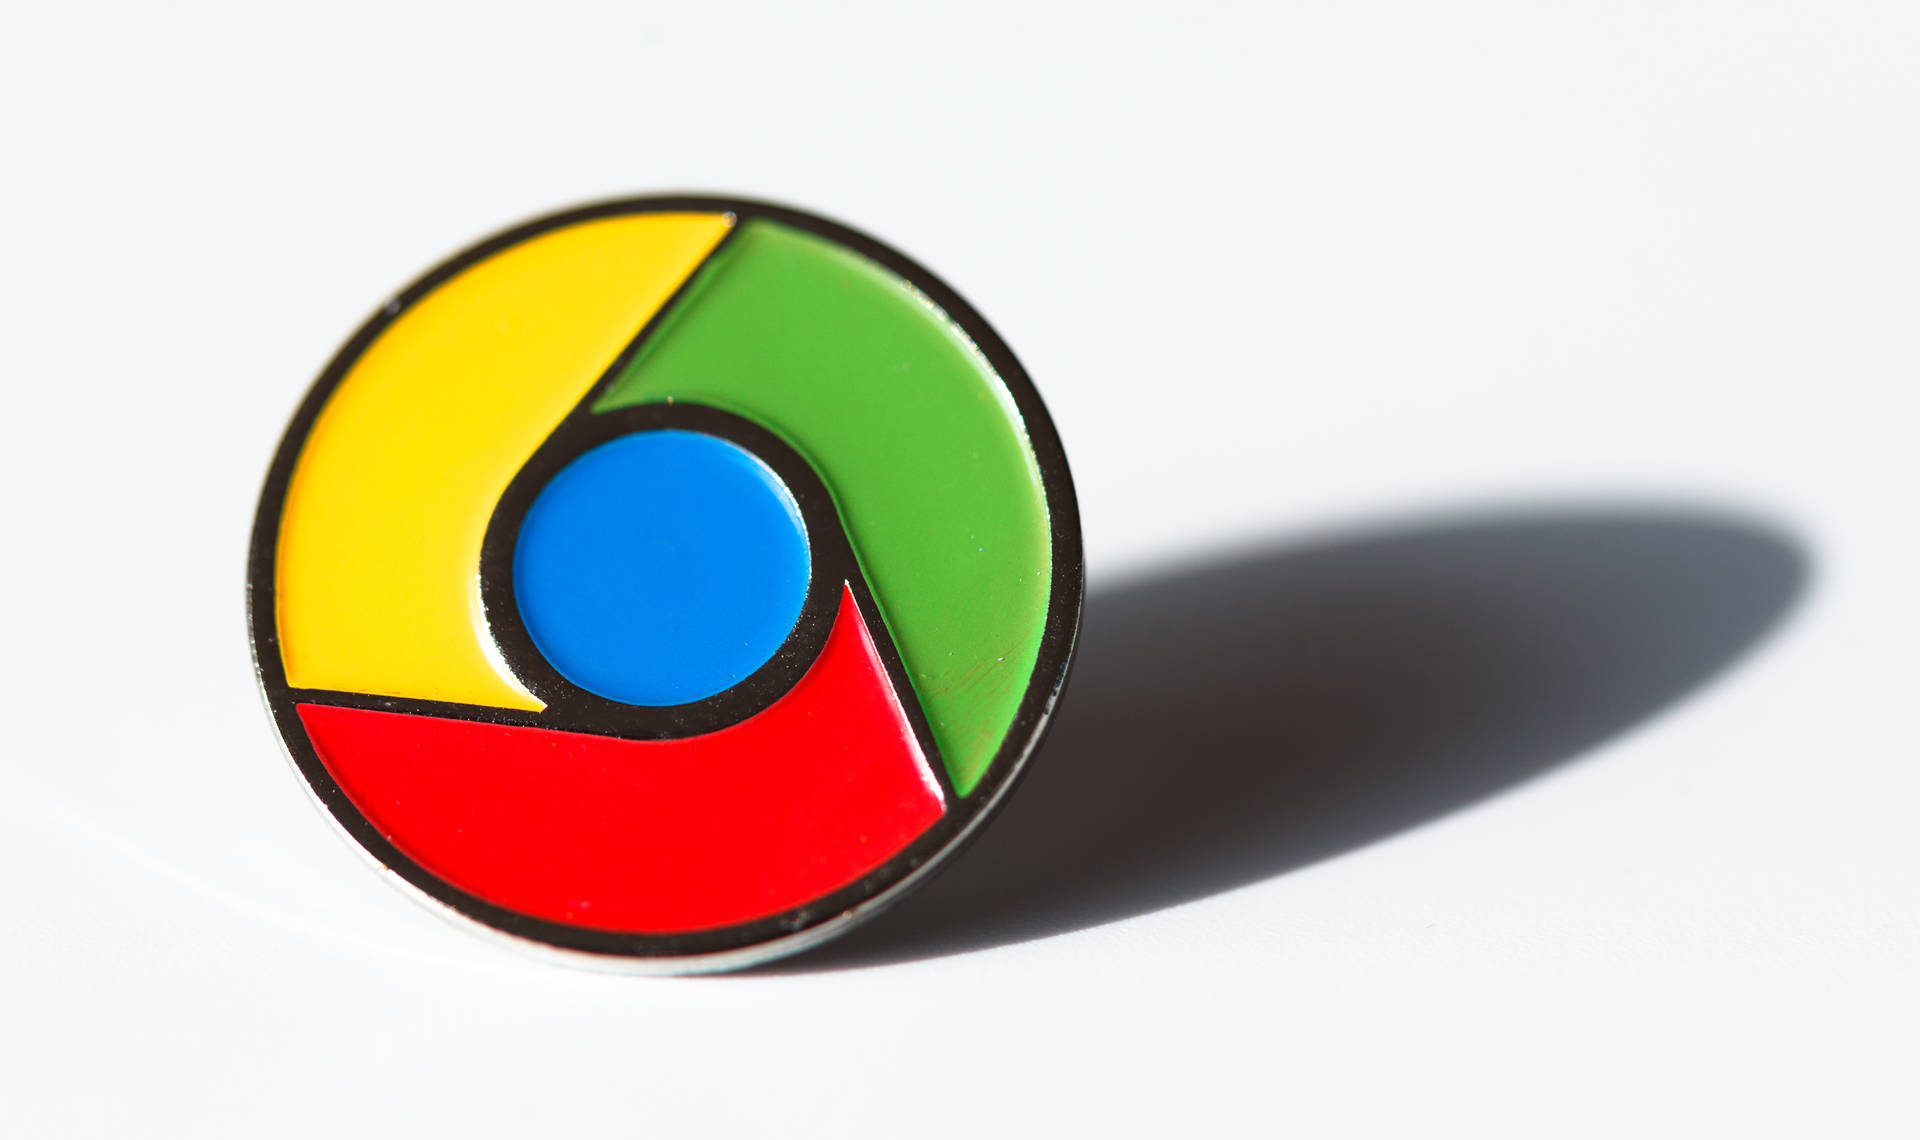 Minimalist Google Chrome Brooch